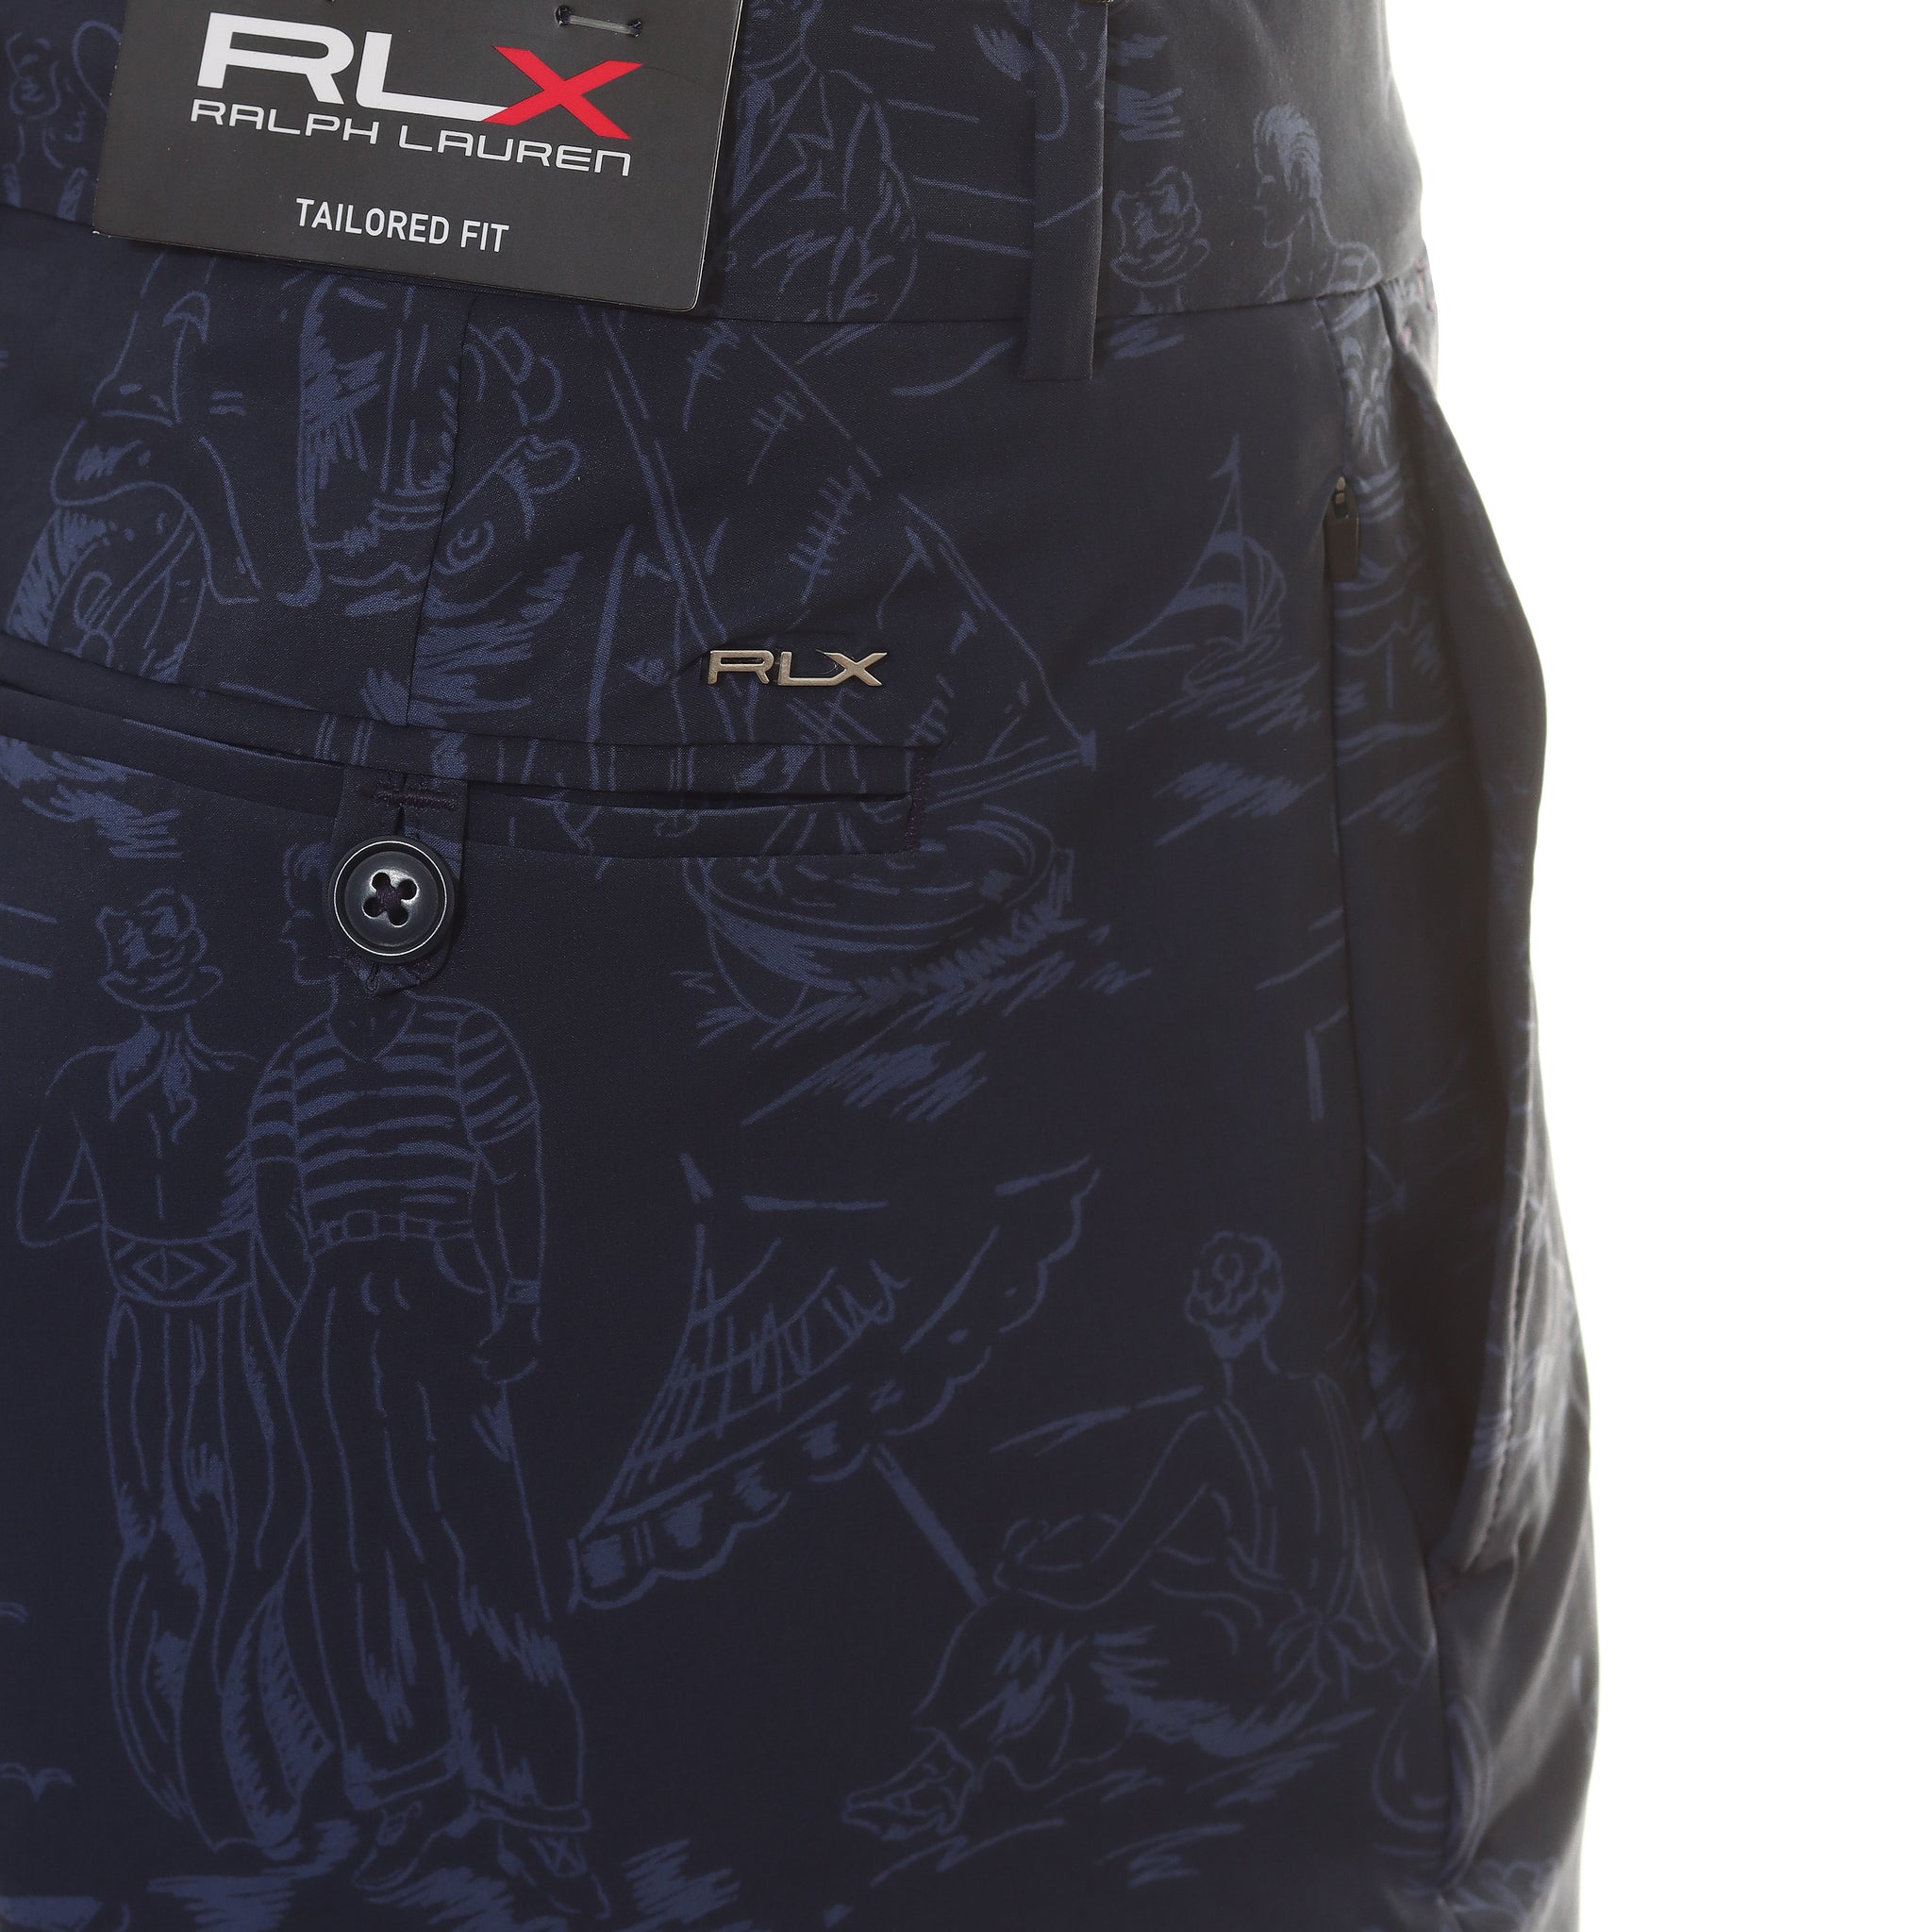 rlx-ralph-lauren-stretch-tailored-fit-shorts-785915692-coastal-sketch-001